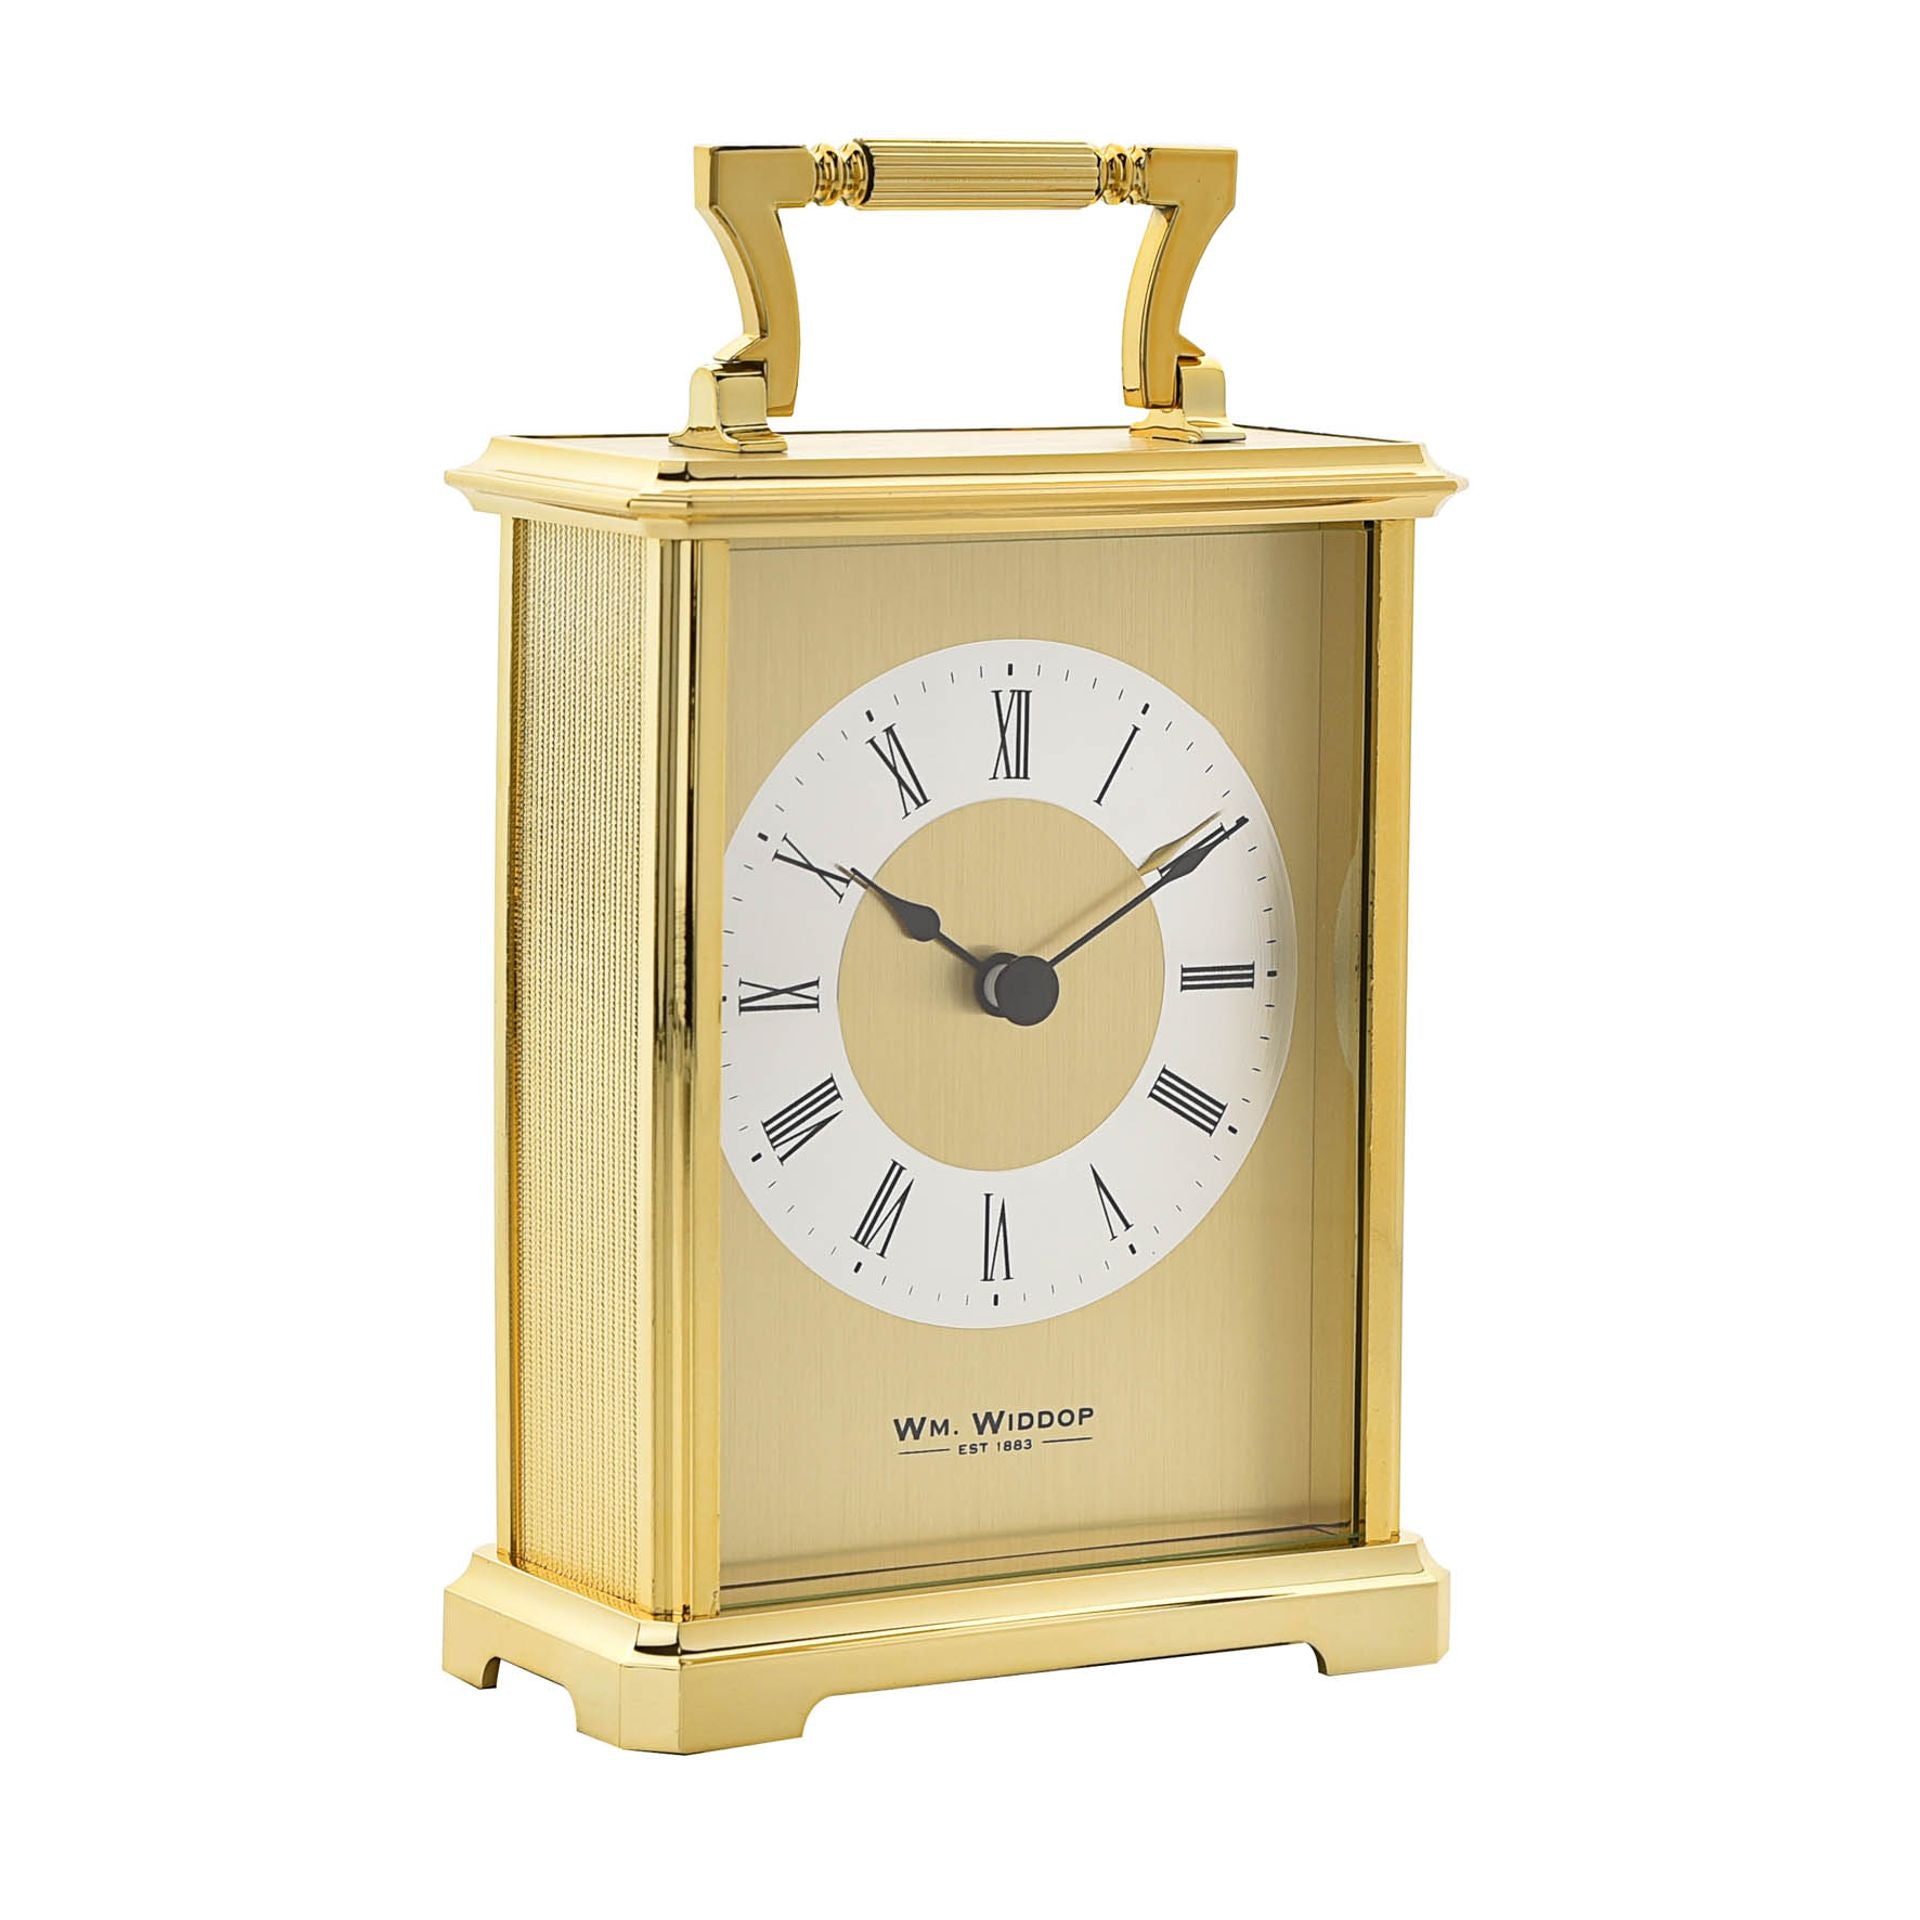 WM. Widdop Rectangular Metal Carriage Clock